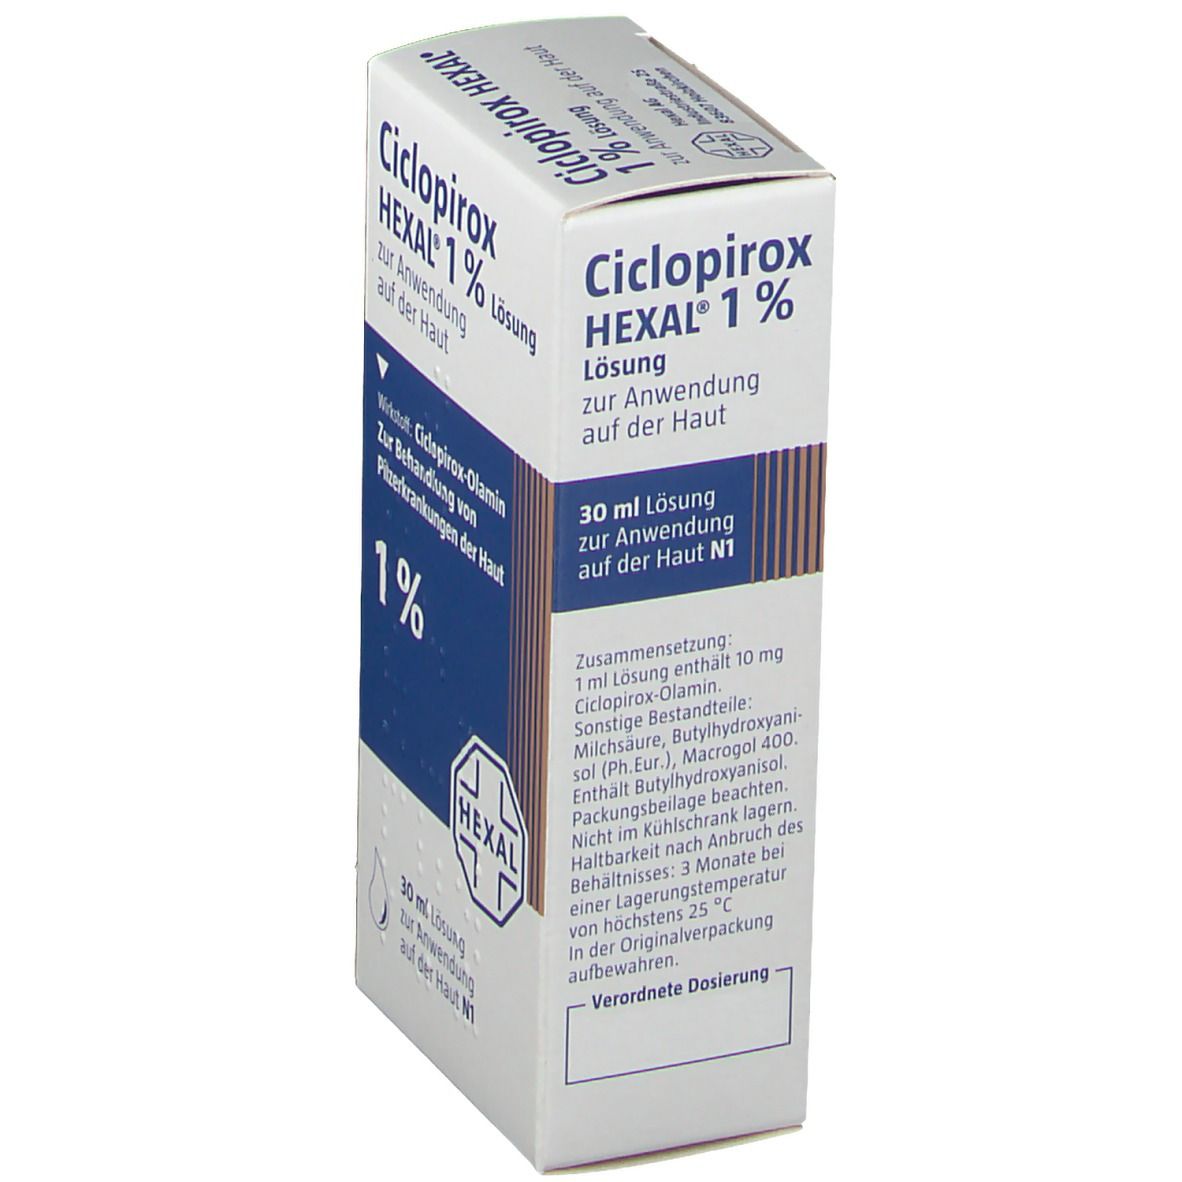 Ciclopirox HEXAL® 1 %